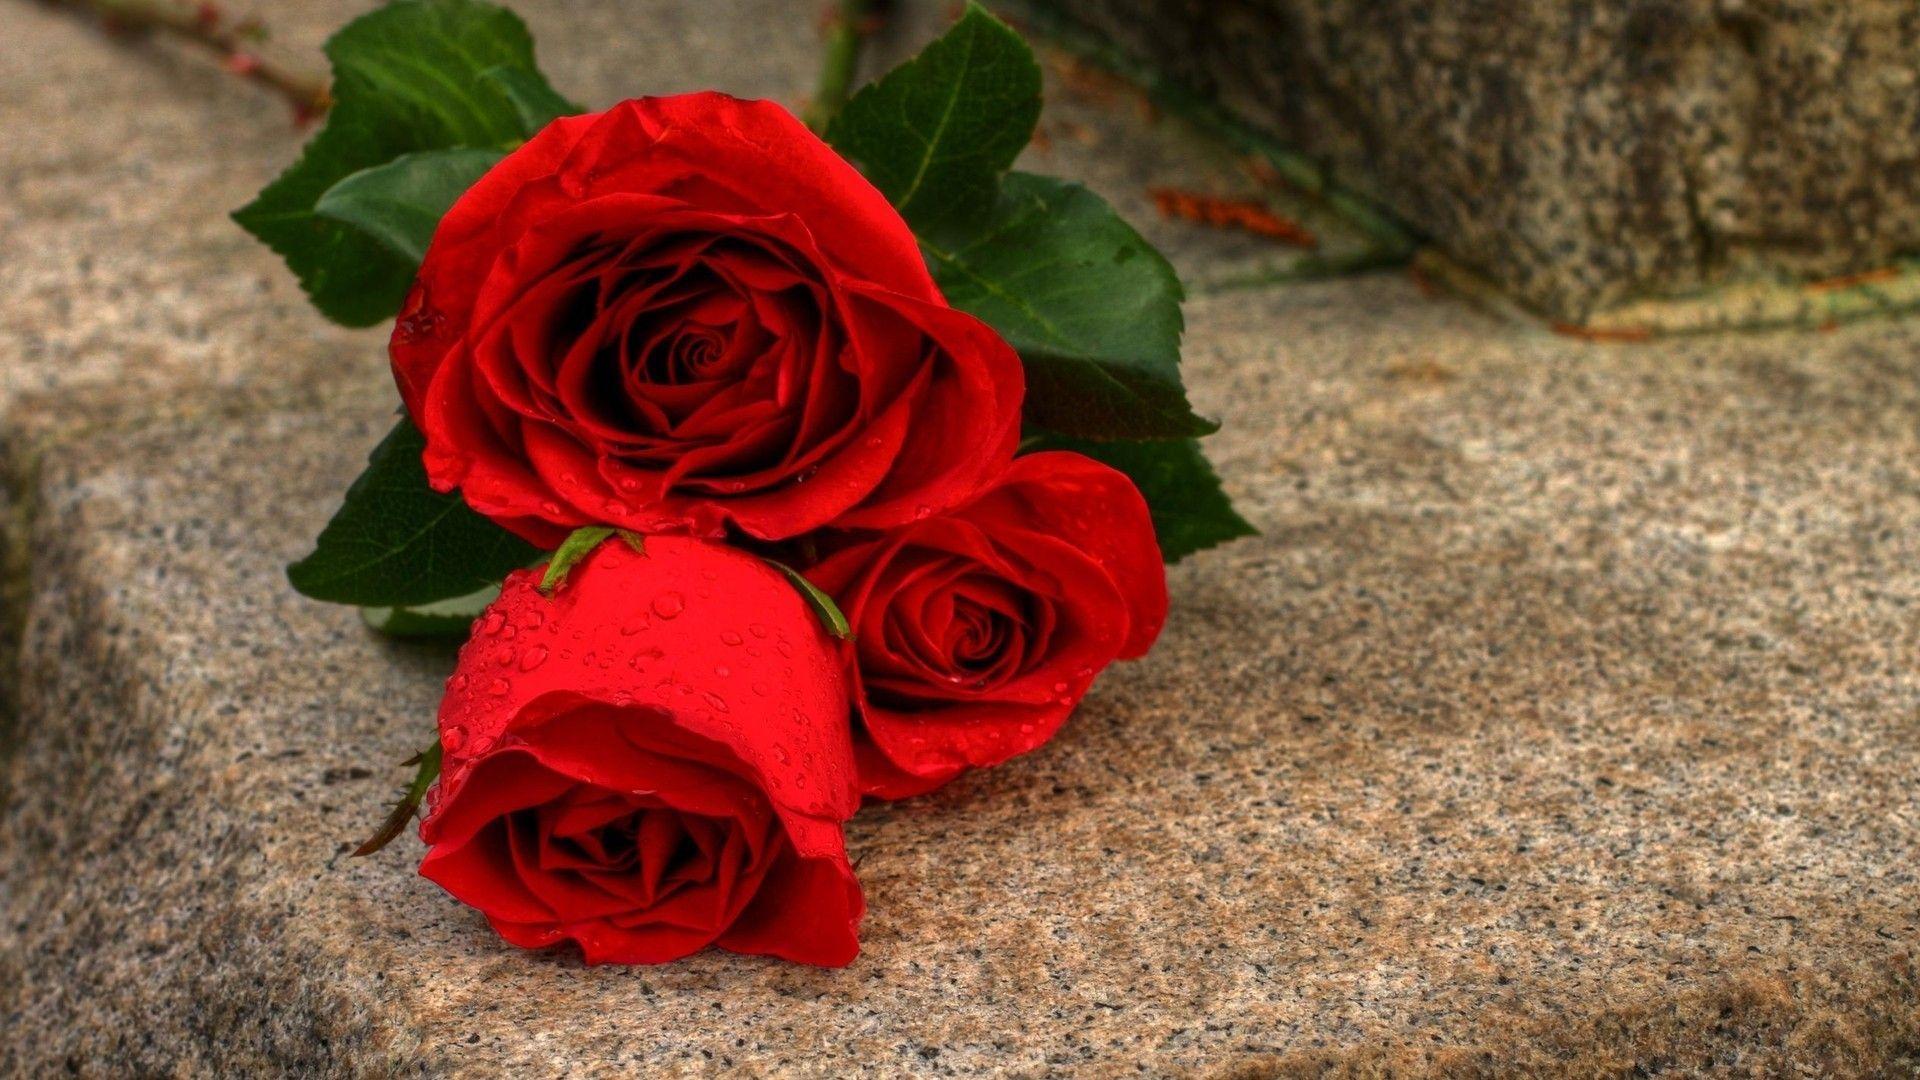 Fresh Red Roses Flowers 1080p HD Wallpaper Download. HD FLower